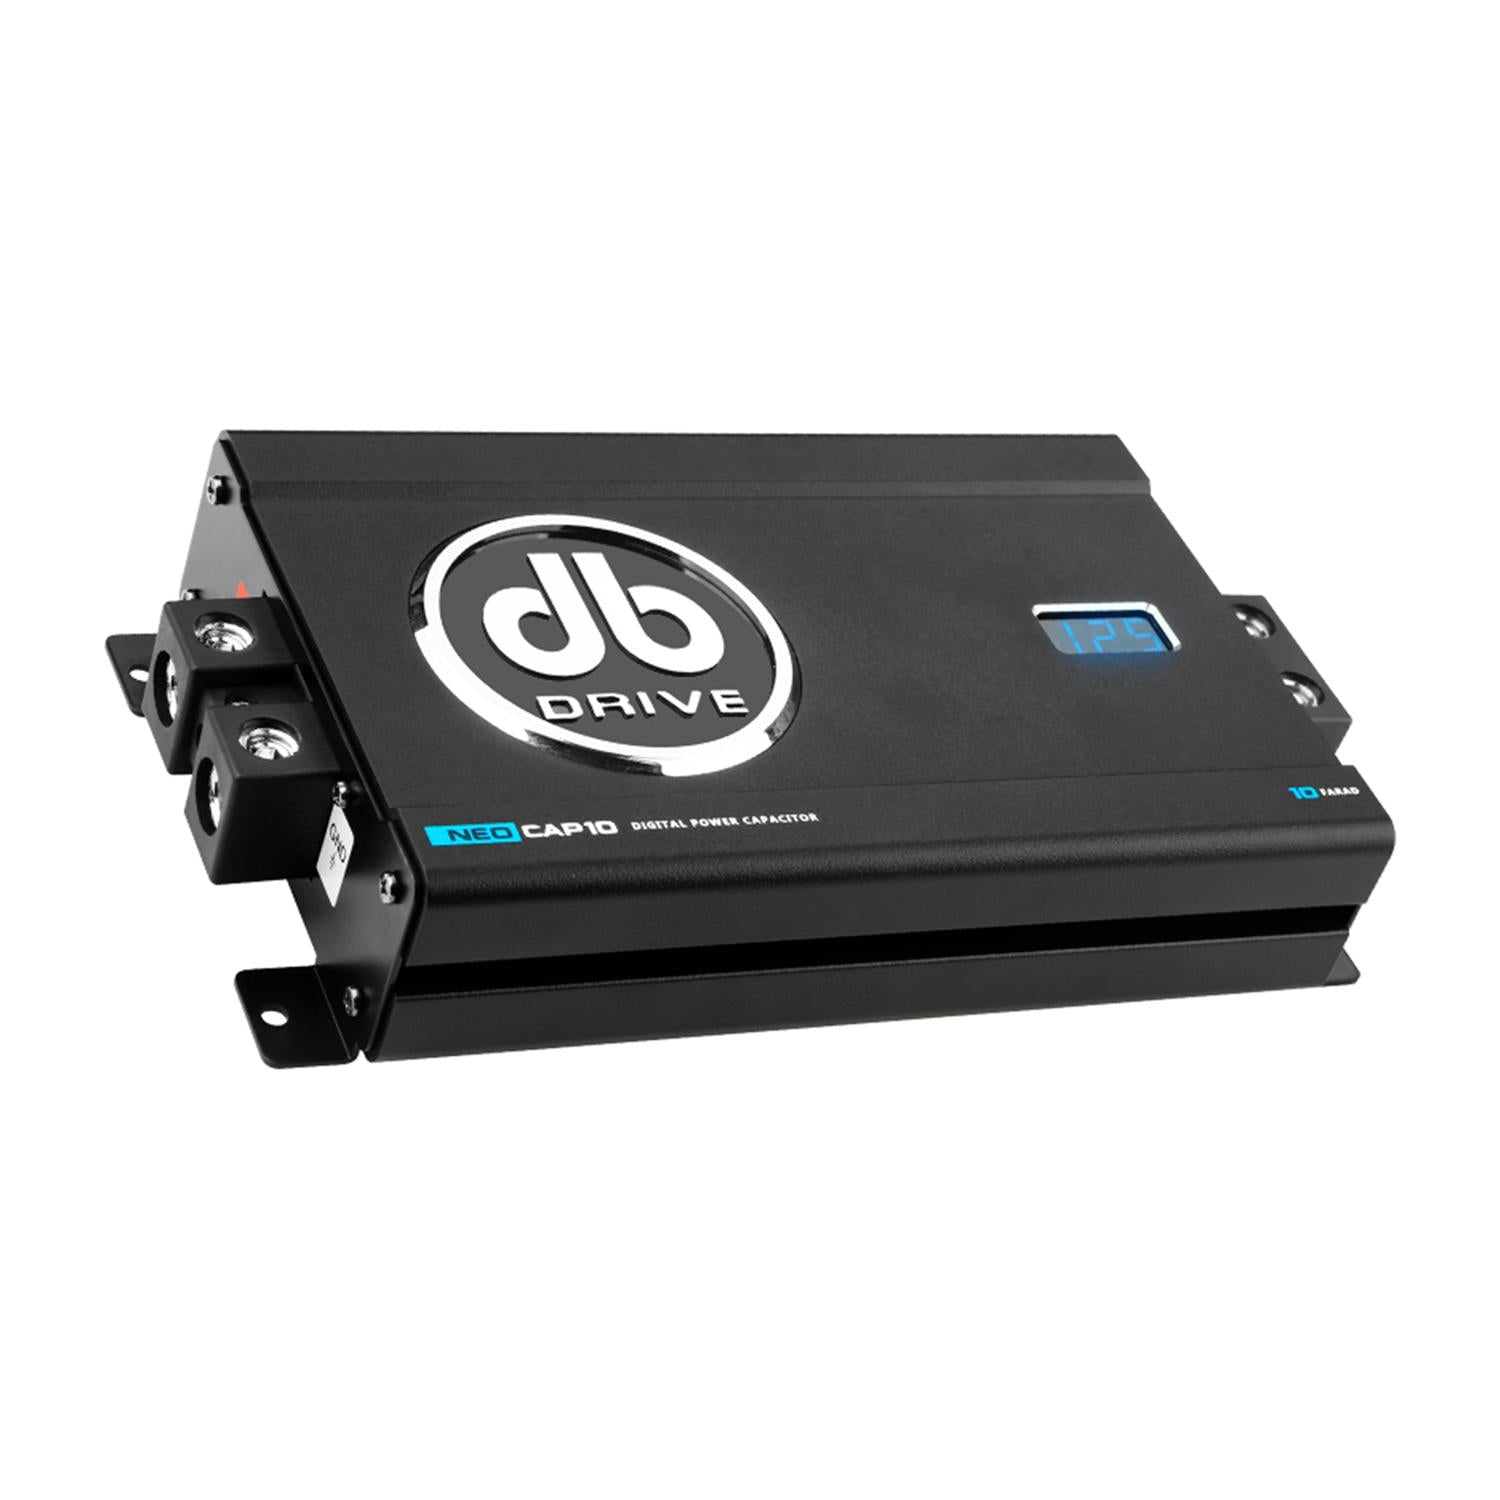 Capacitor Digital DB Drive NEOCAP10 10 Faradios 12-24 V ... - Audioshop México lo mejor en Car Audio en México -  DB Drive